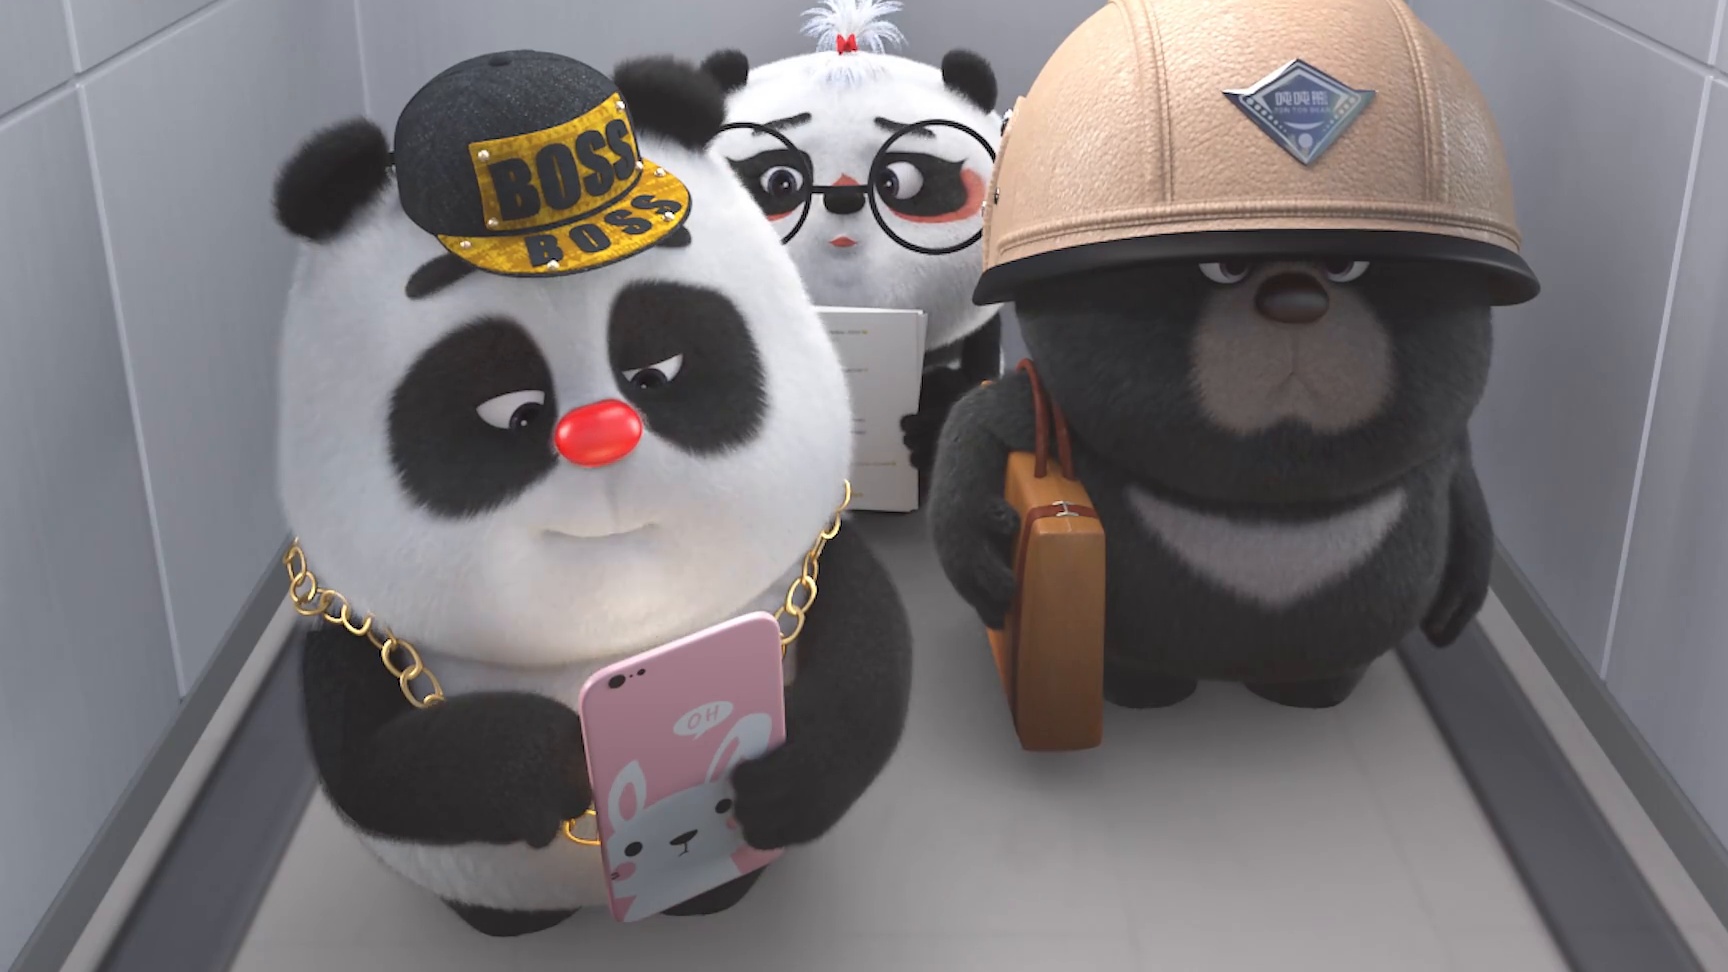 AMV]Rude panda sodcasting in an elevator - Bilibili